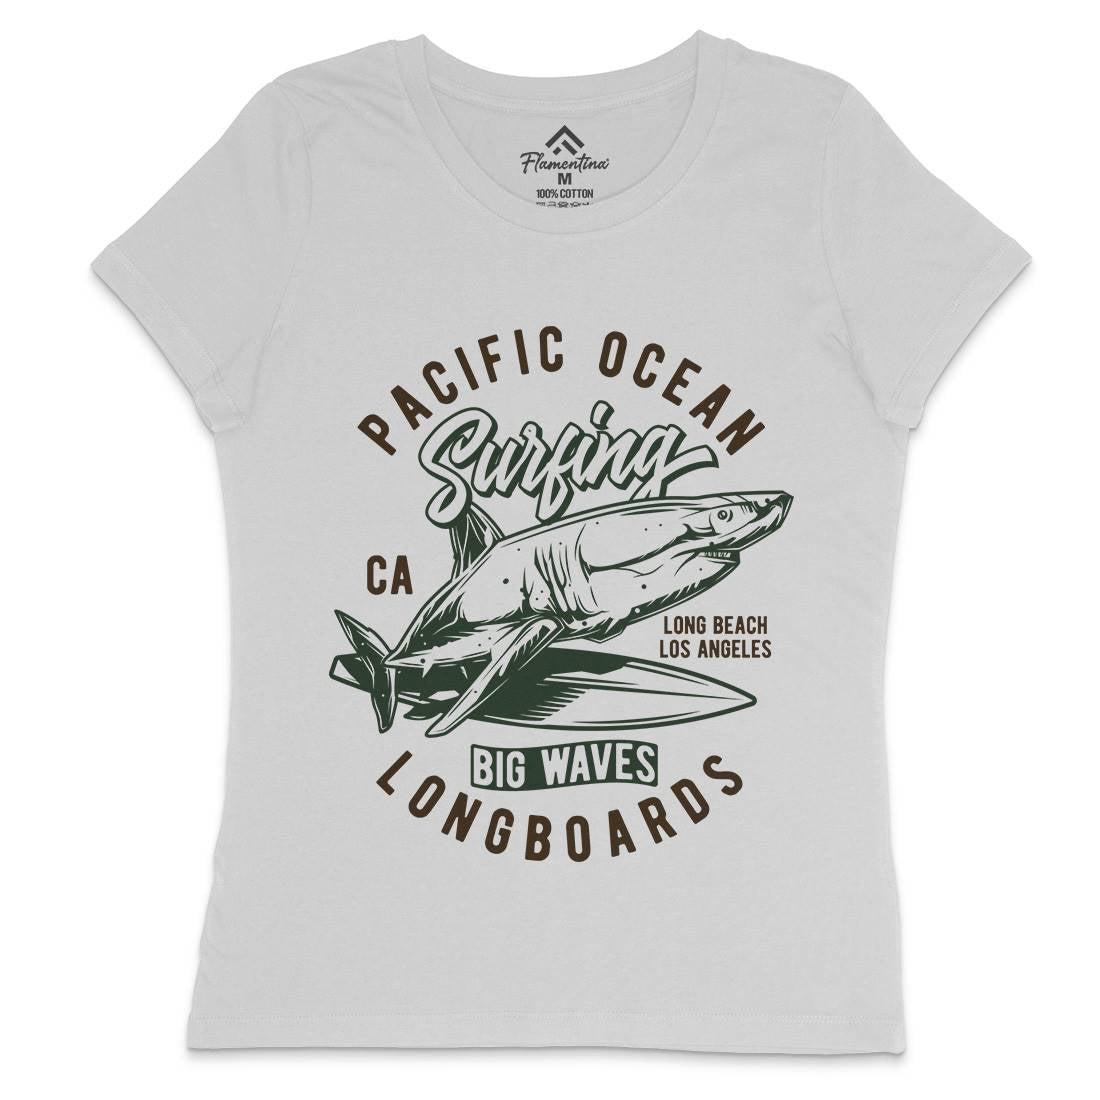 Pacific Ocean Surfing Womens Crew Neck T-Shirt Surf B869